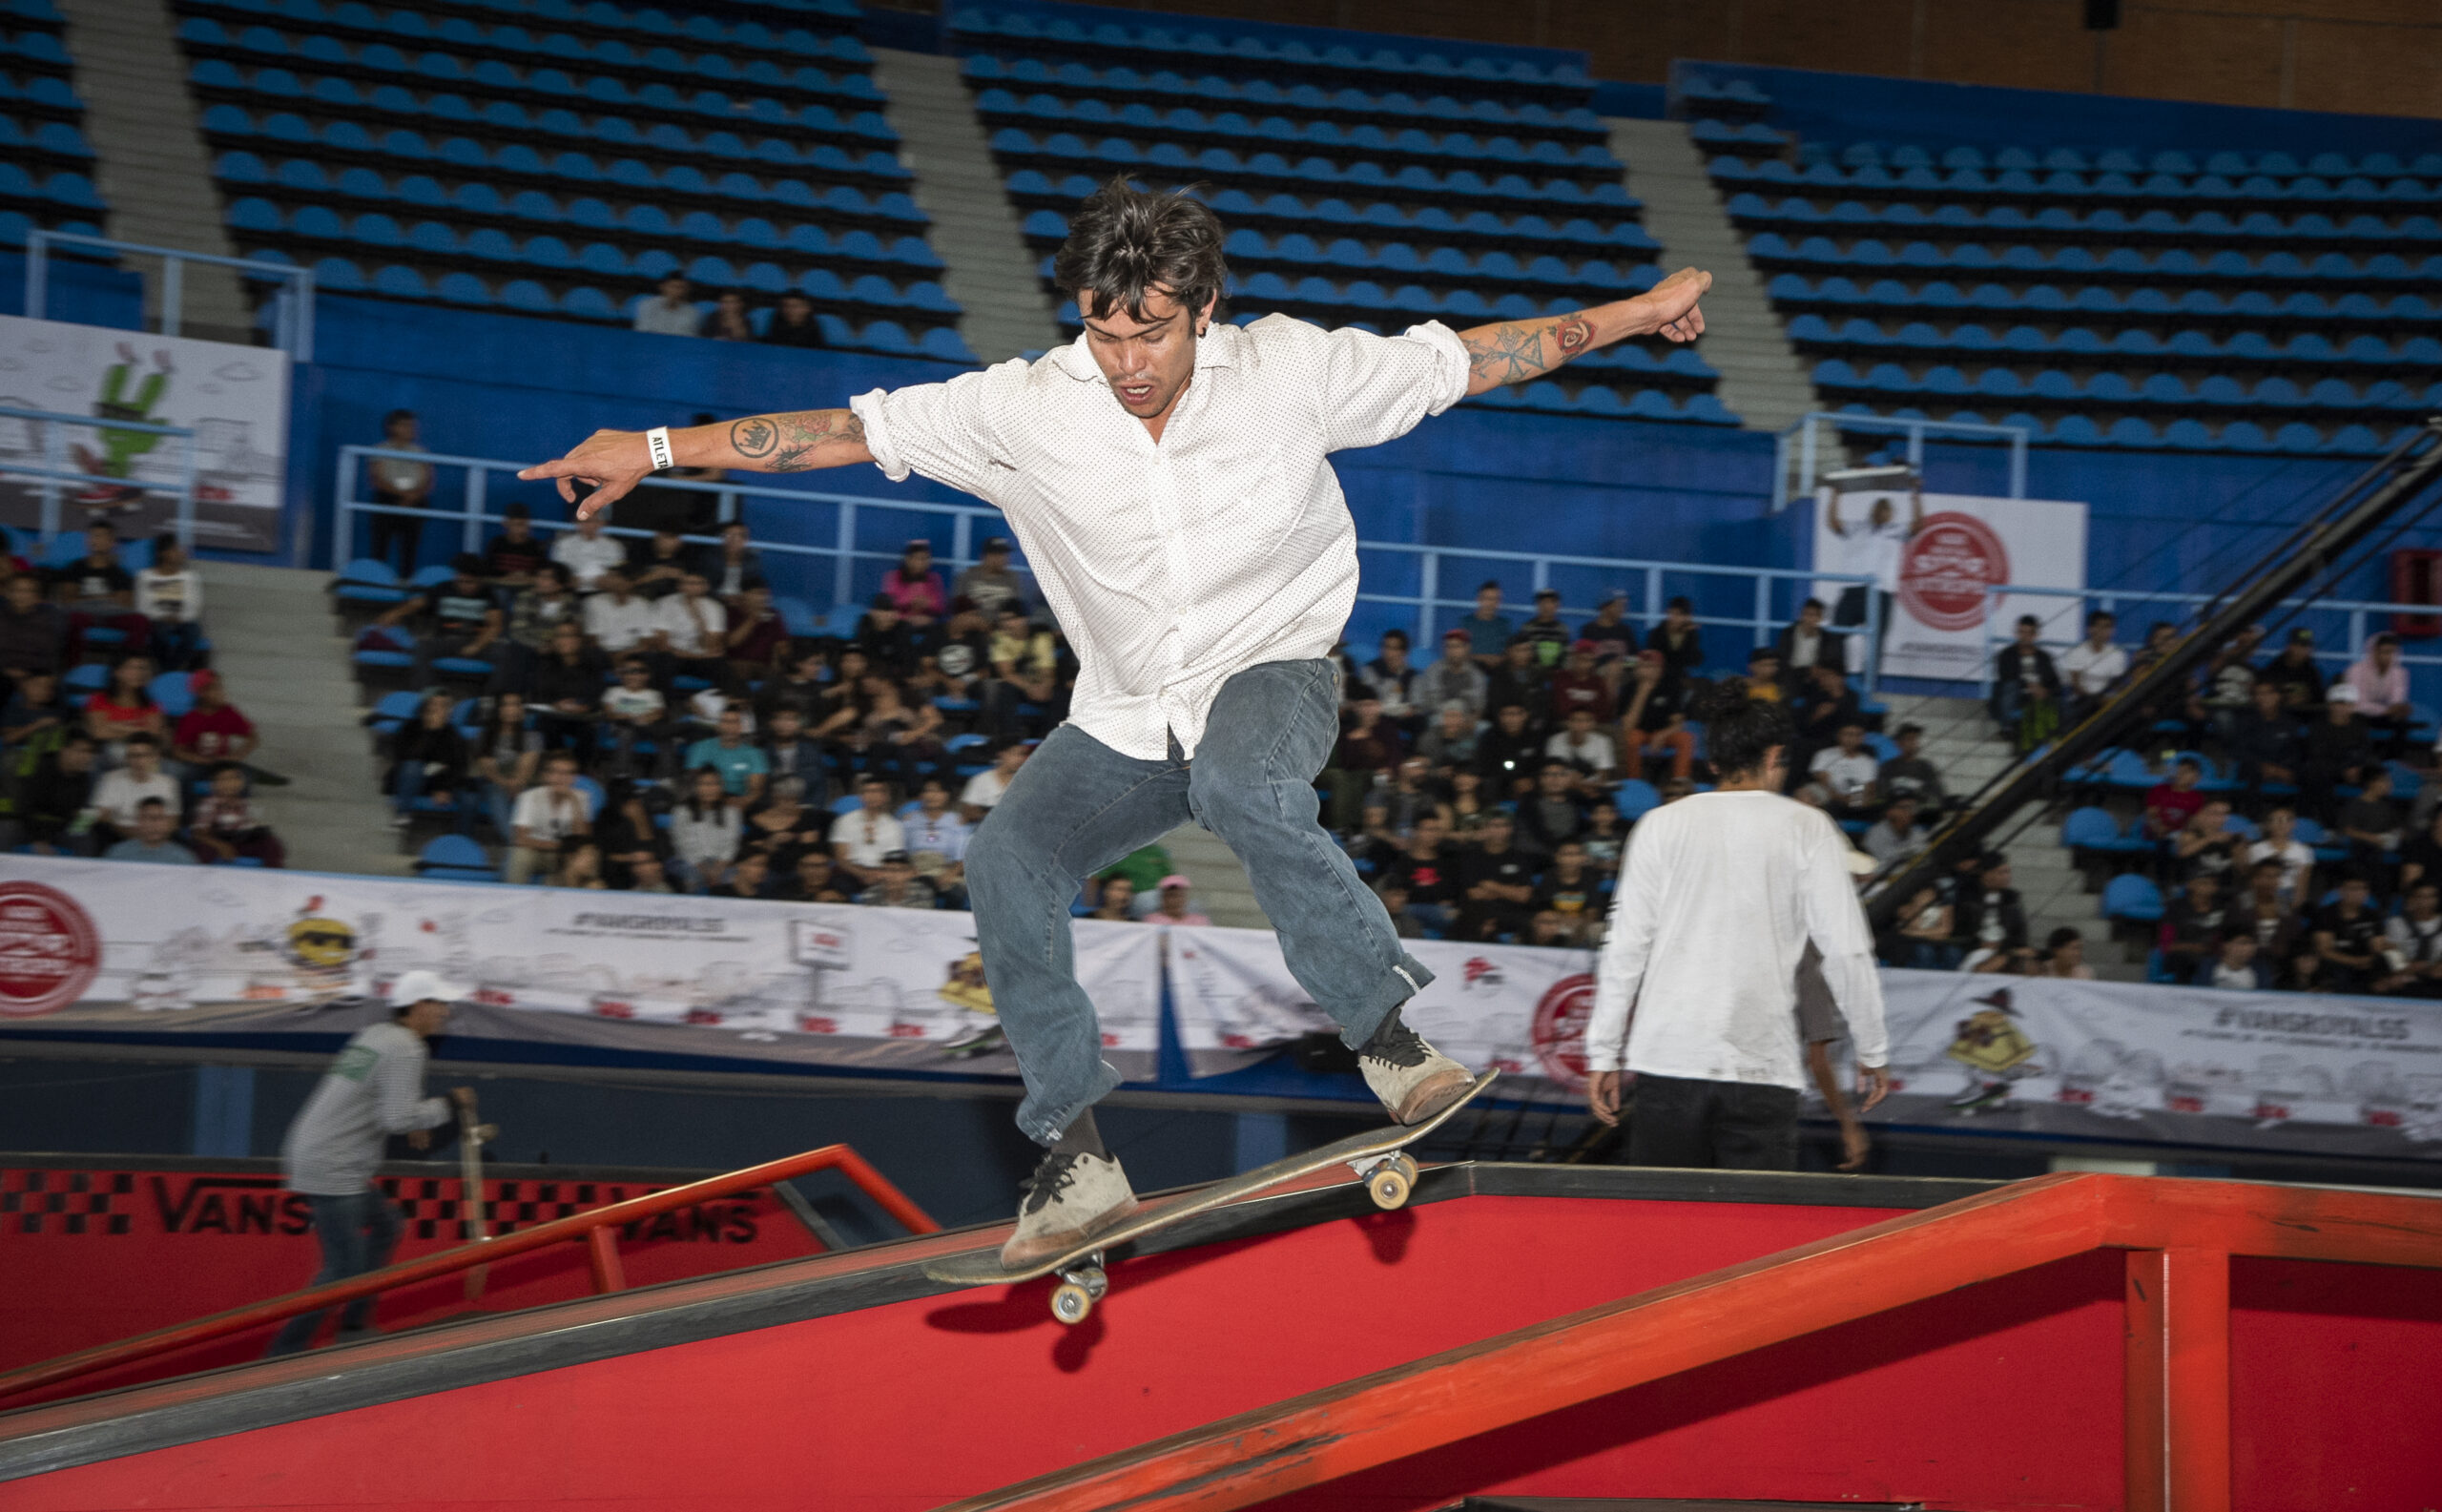 Hoy se celebra el Día Mundial del Skatebording y llega Vans World